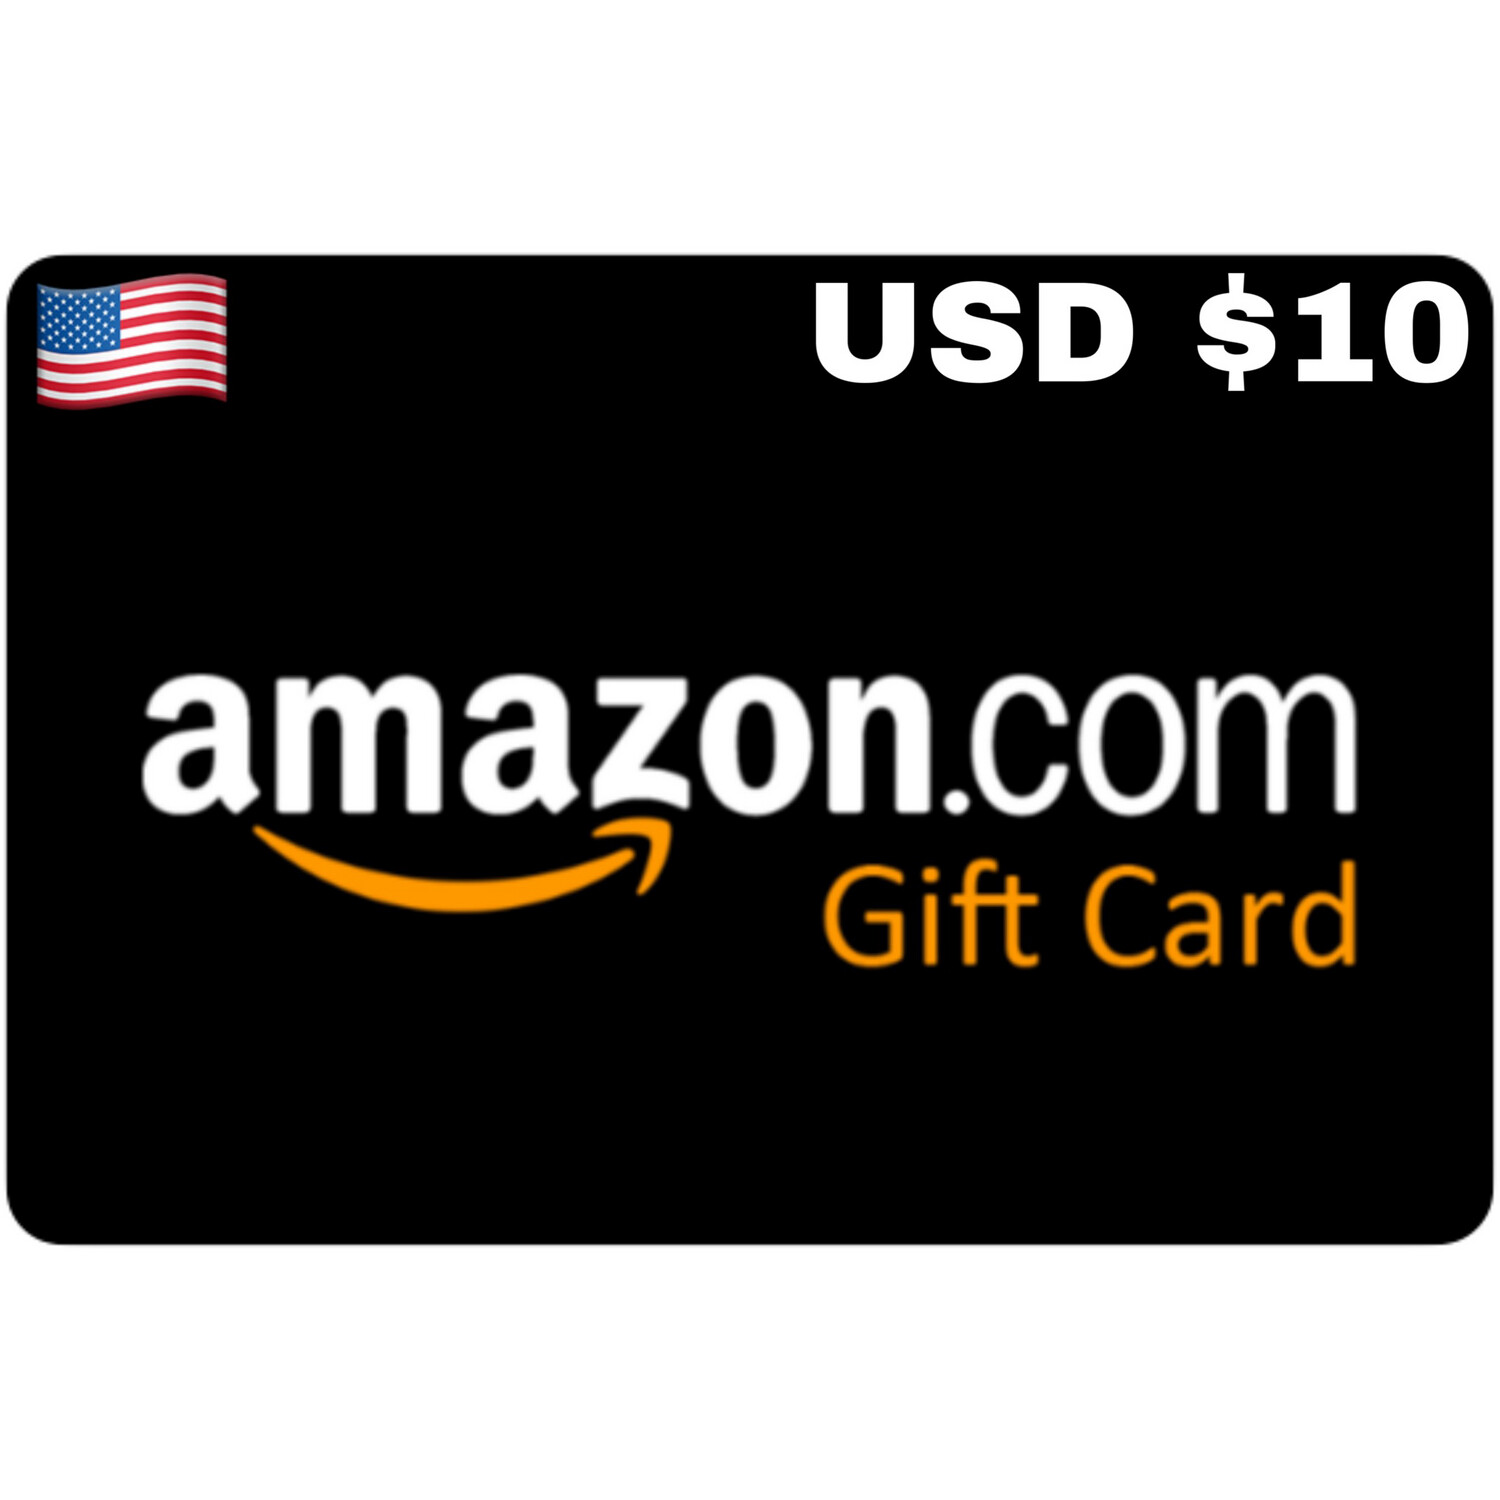 Amazon.com Gift Card USD $10